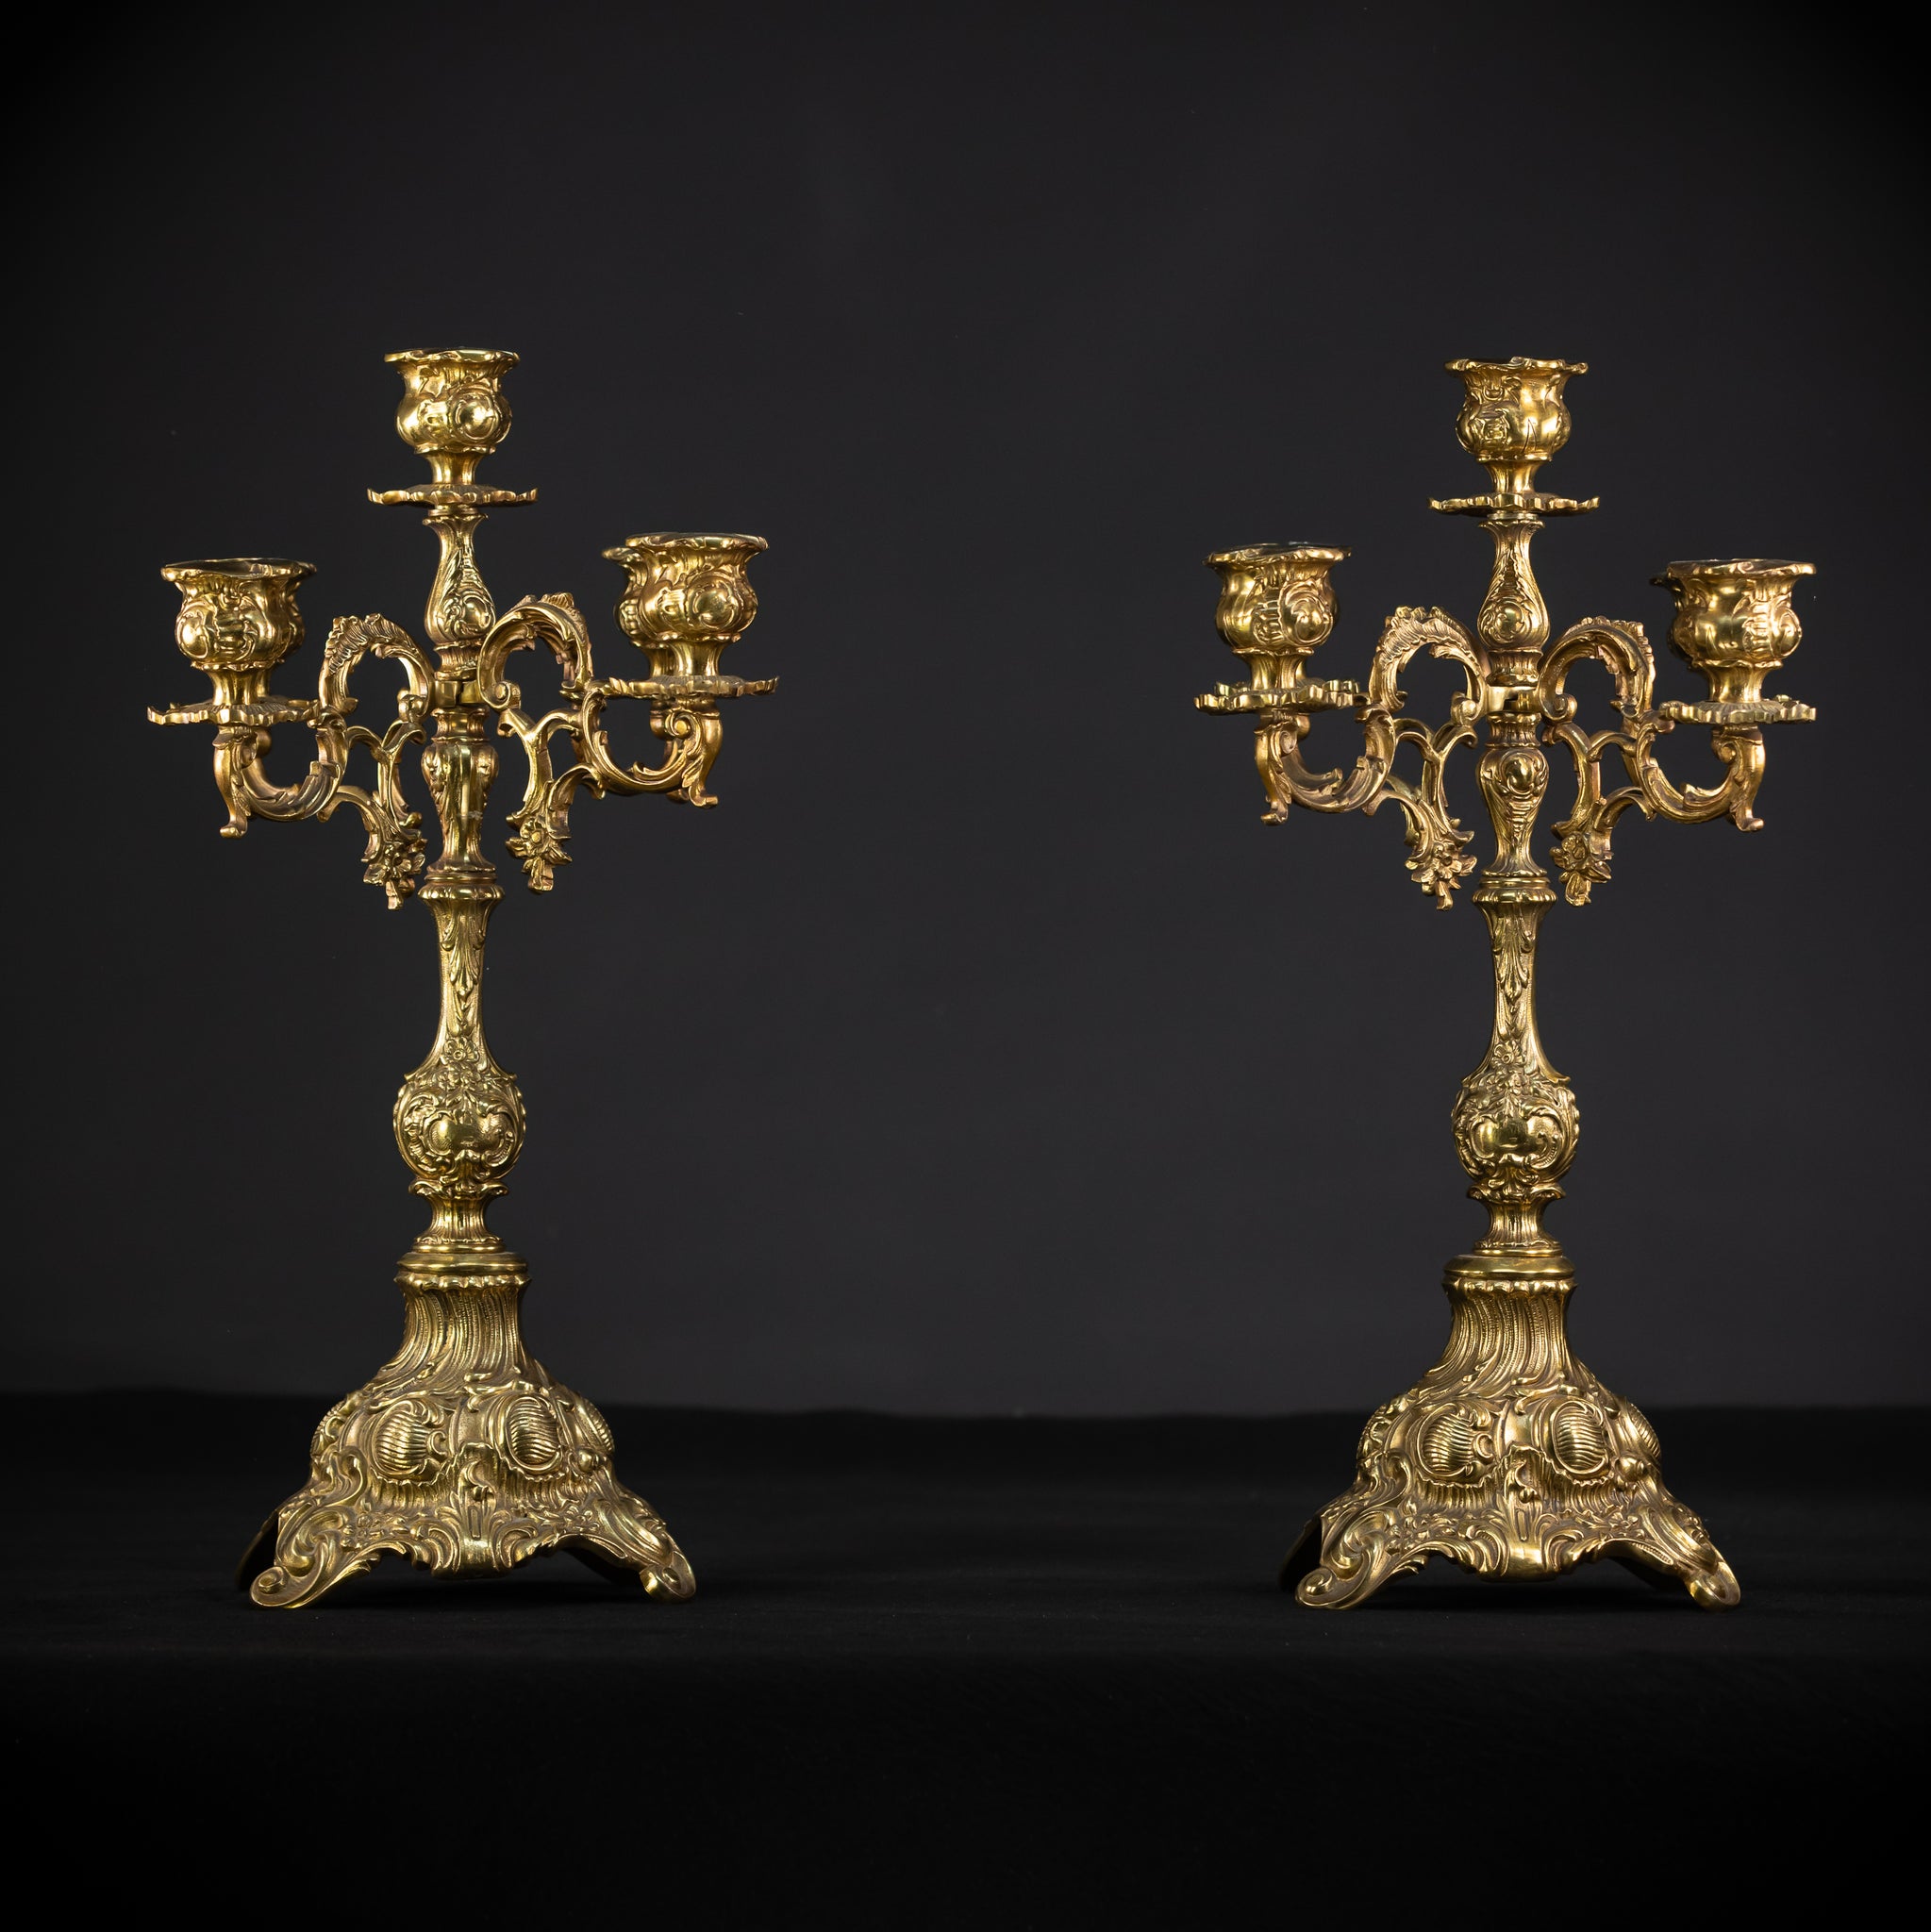 Pair of Bronze Candelabras  | Mid 1900s Vintage | 17.5" / 44.5 cm